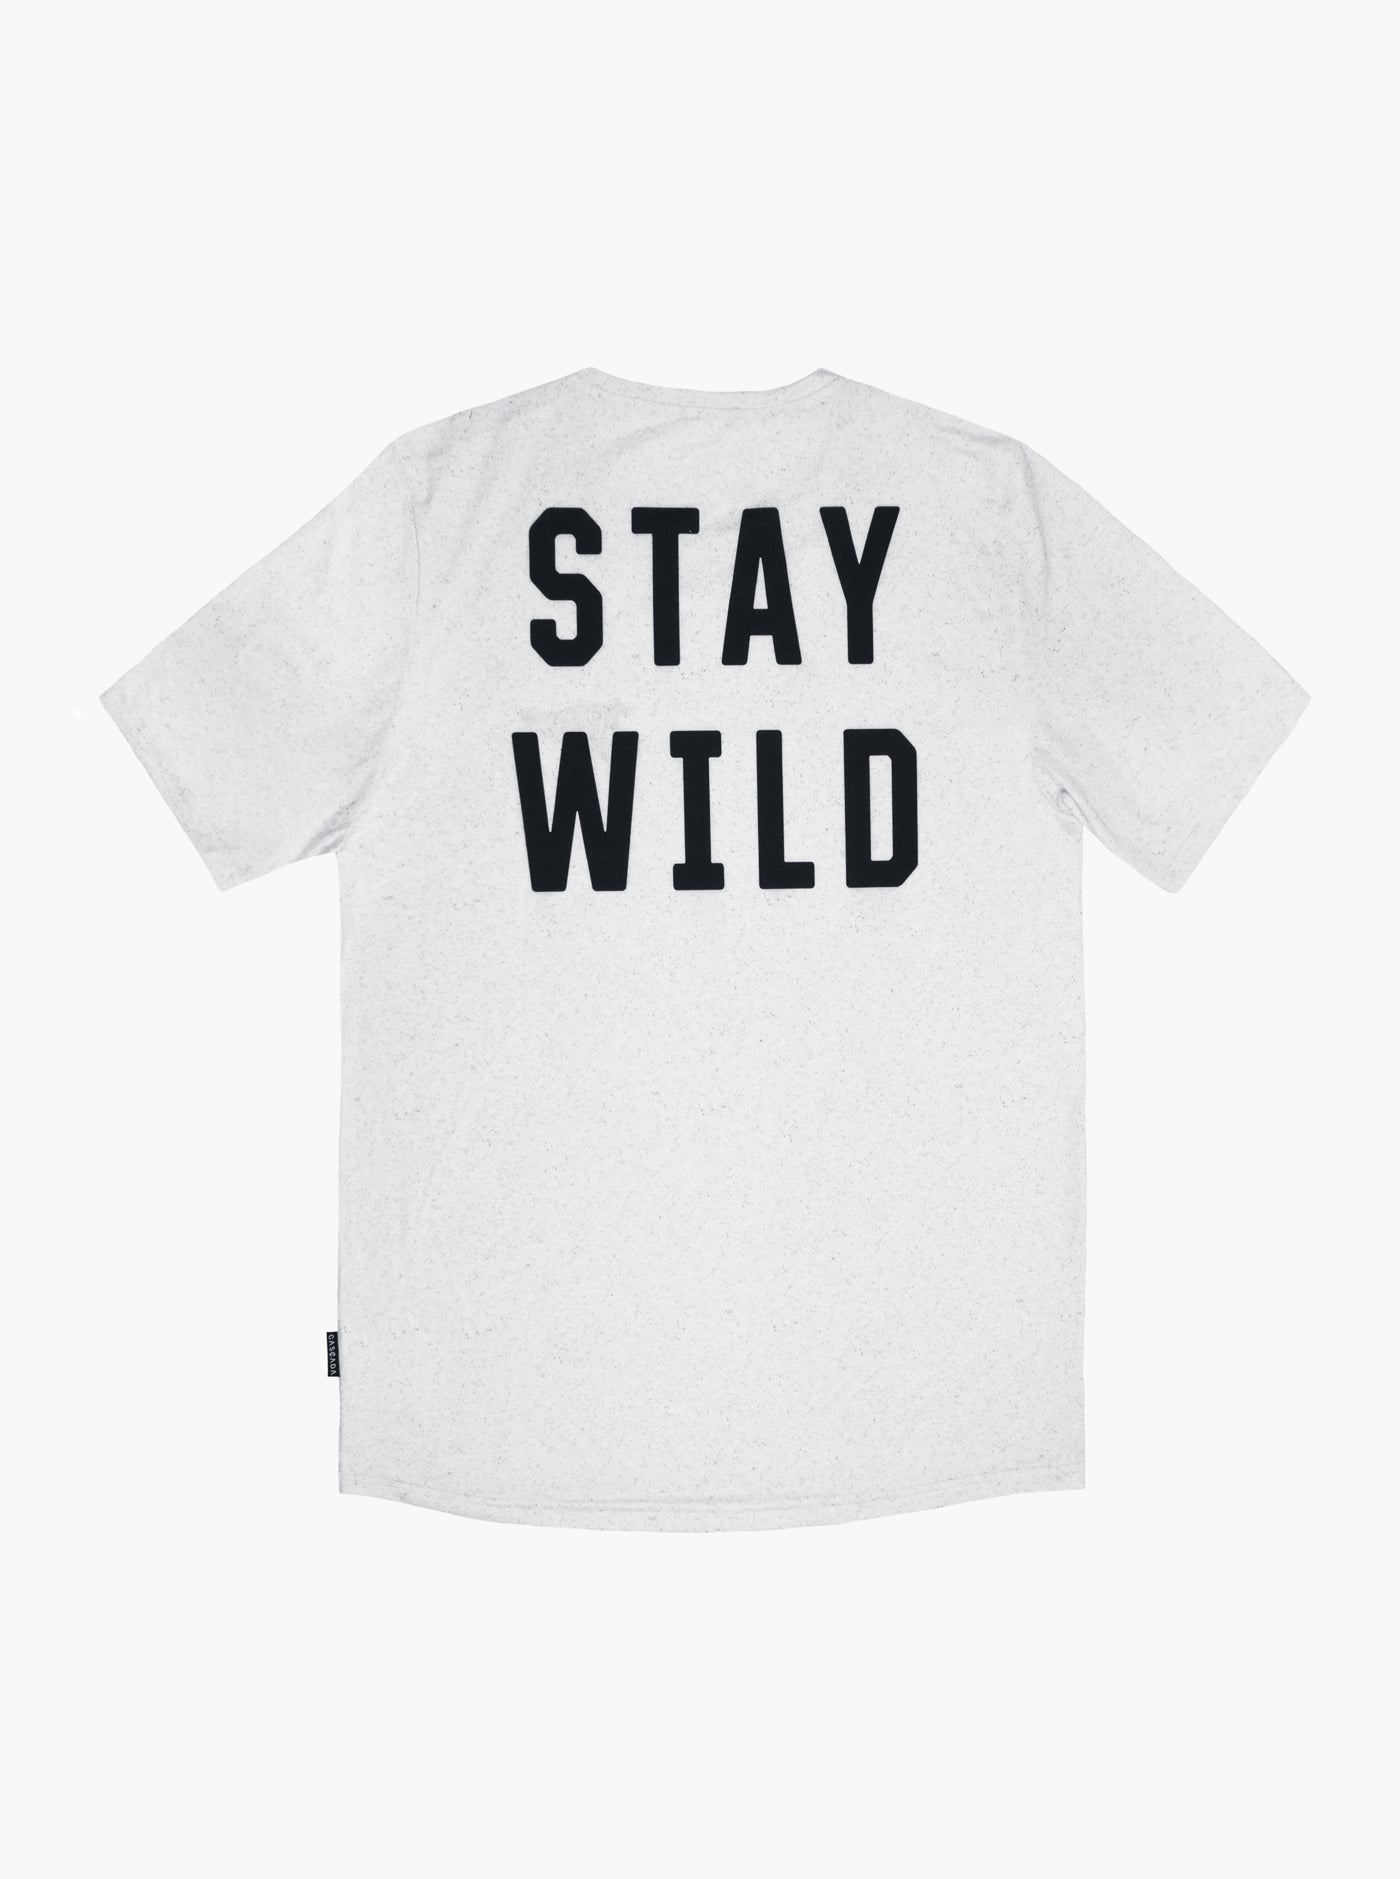 Trail T-Shirt - Stay Wild